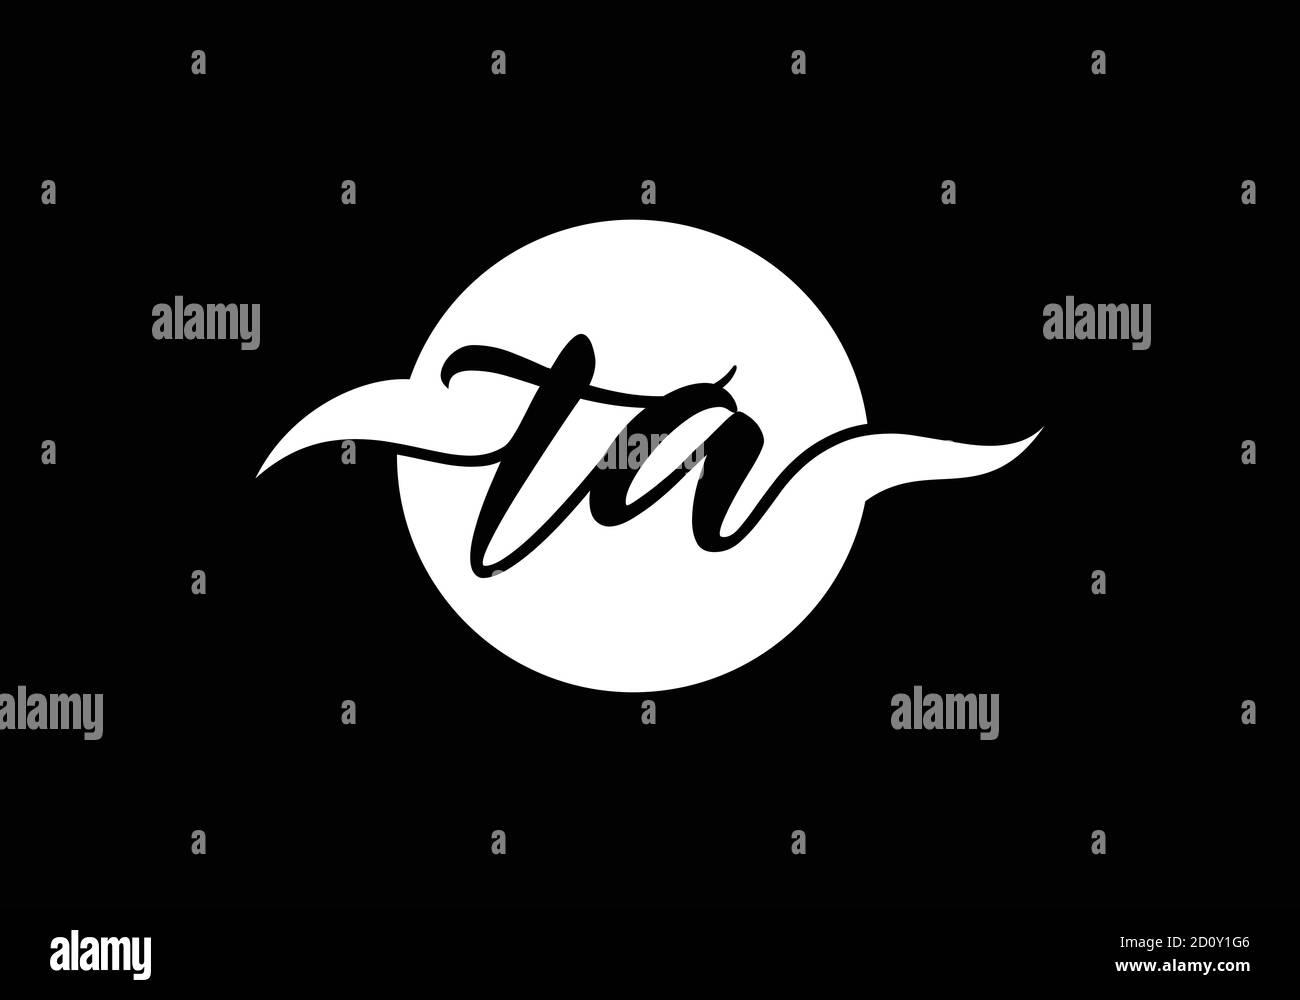 Initial Monogram Letter T A Logo Design Vector Template. T A Letter Logo Design Stock Vector